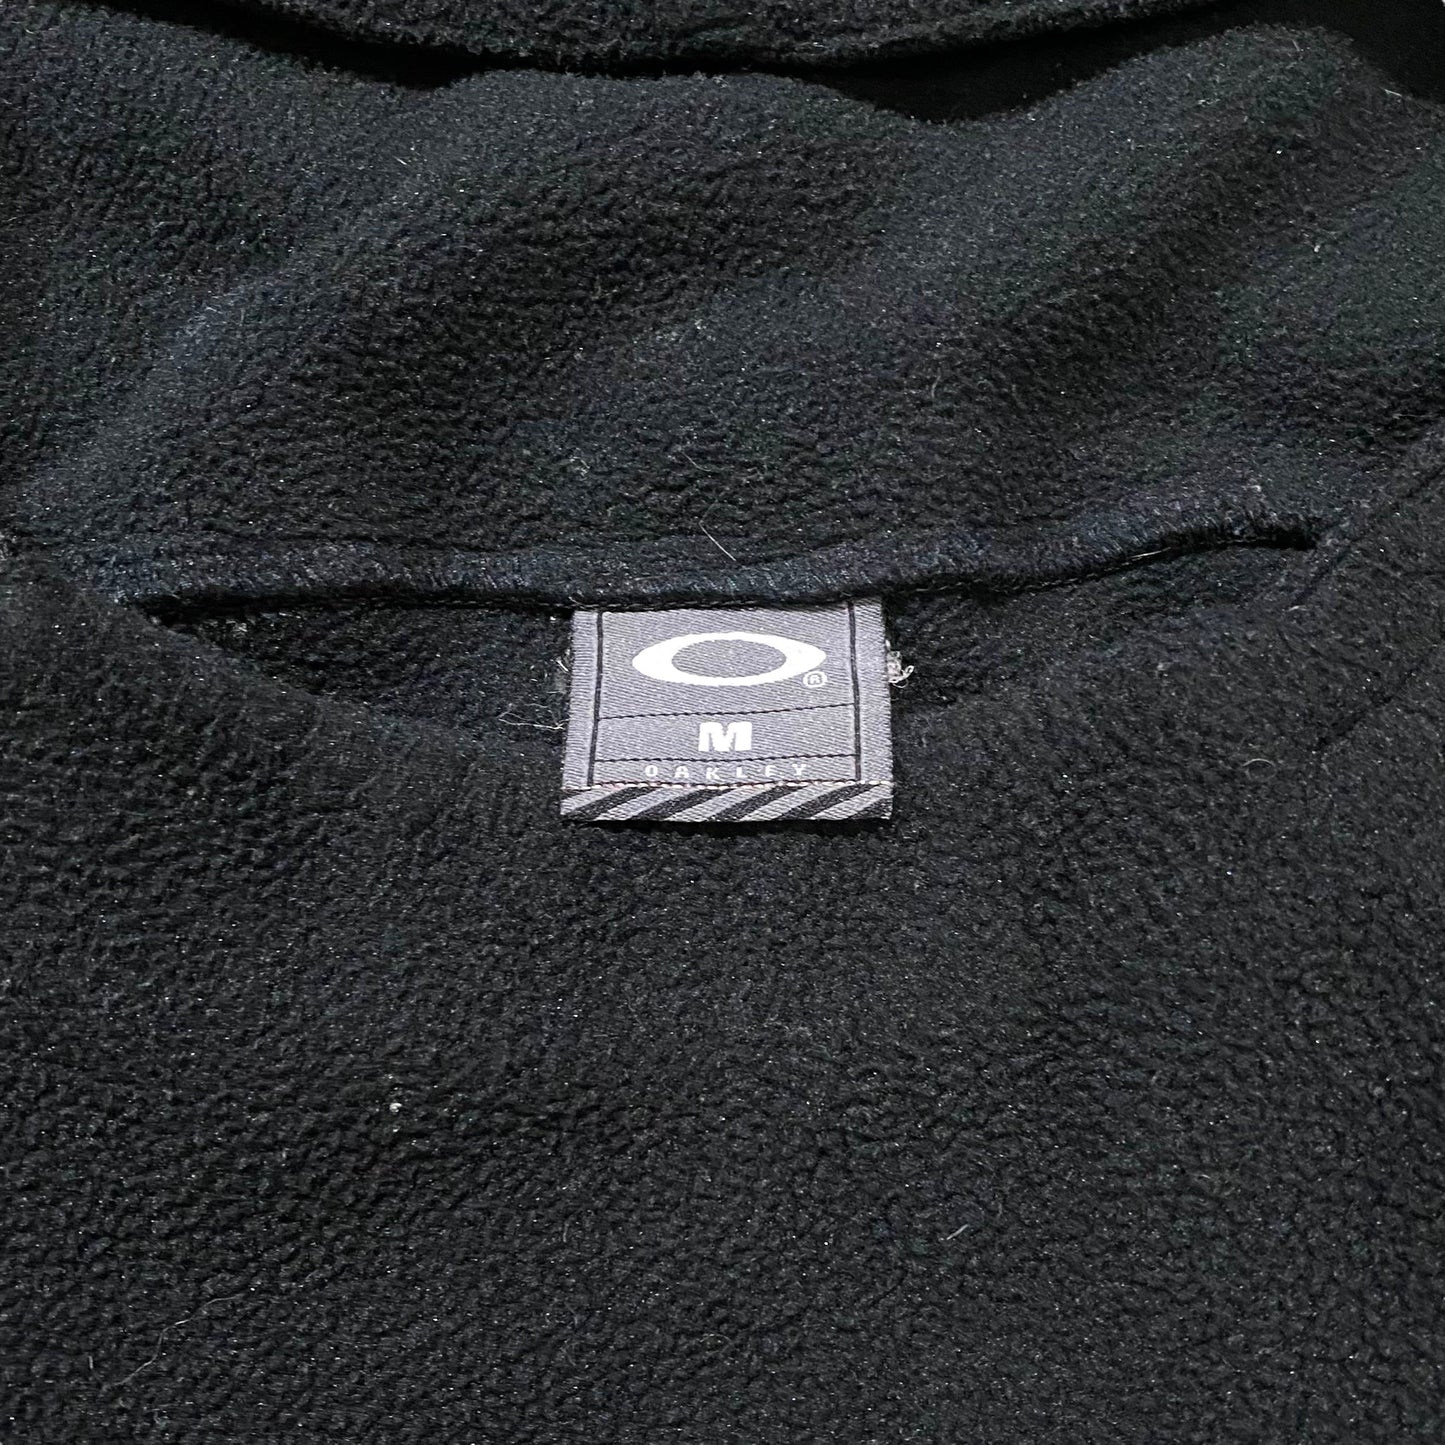 00's "OAKLEY" Fleece fabric anorak parka